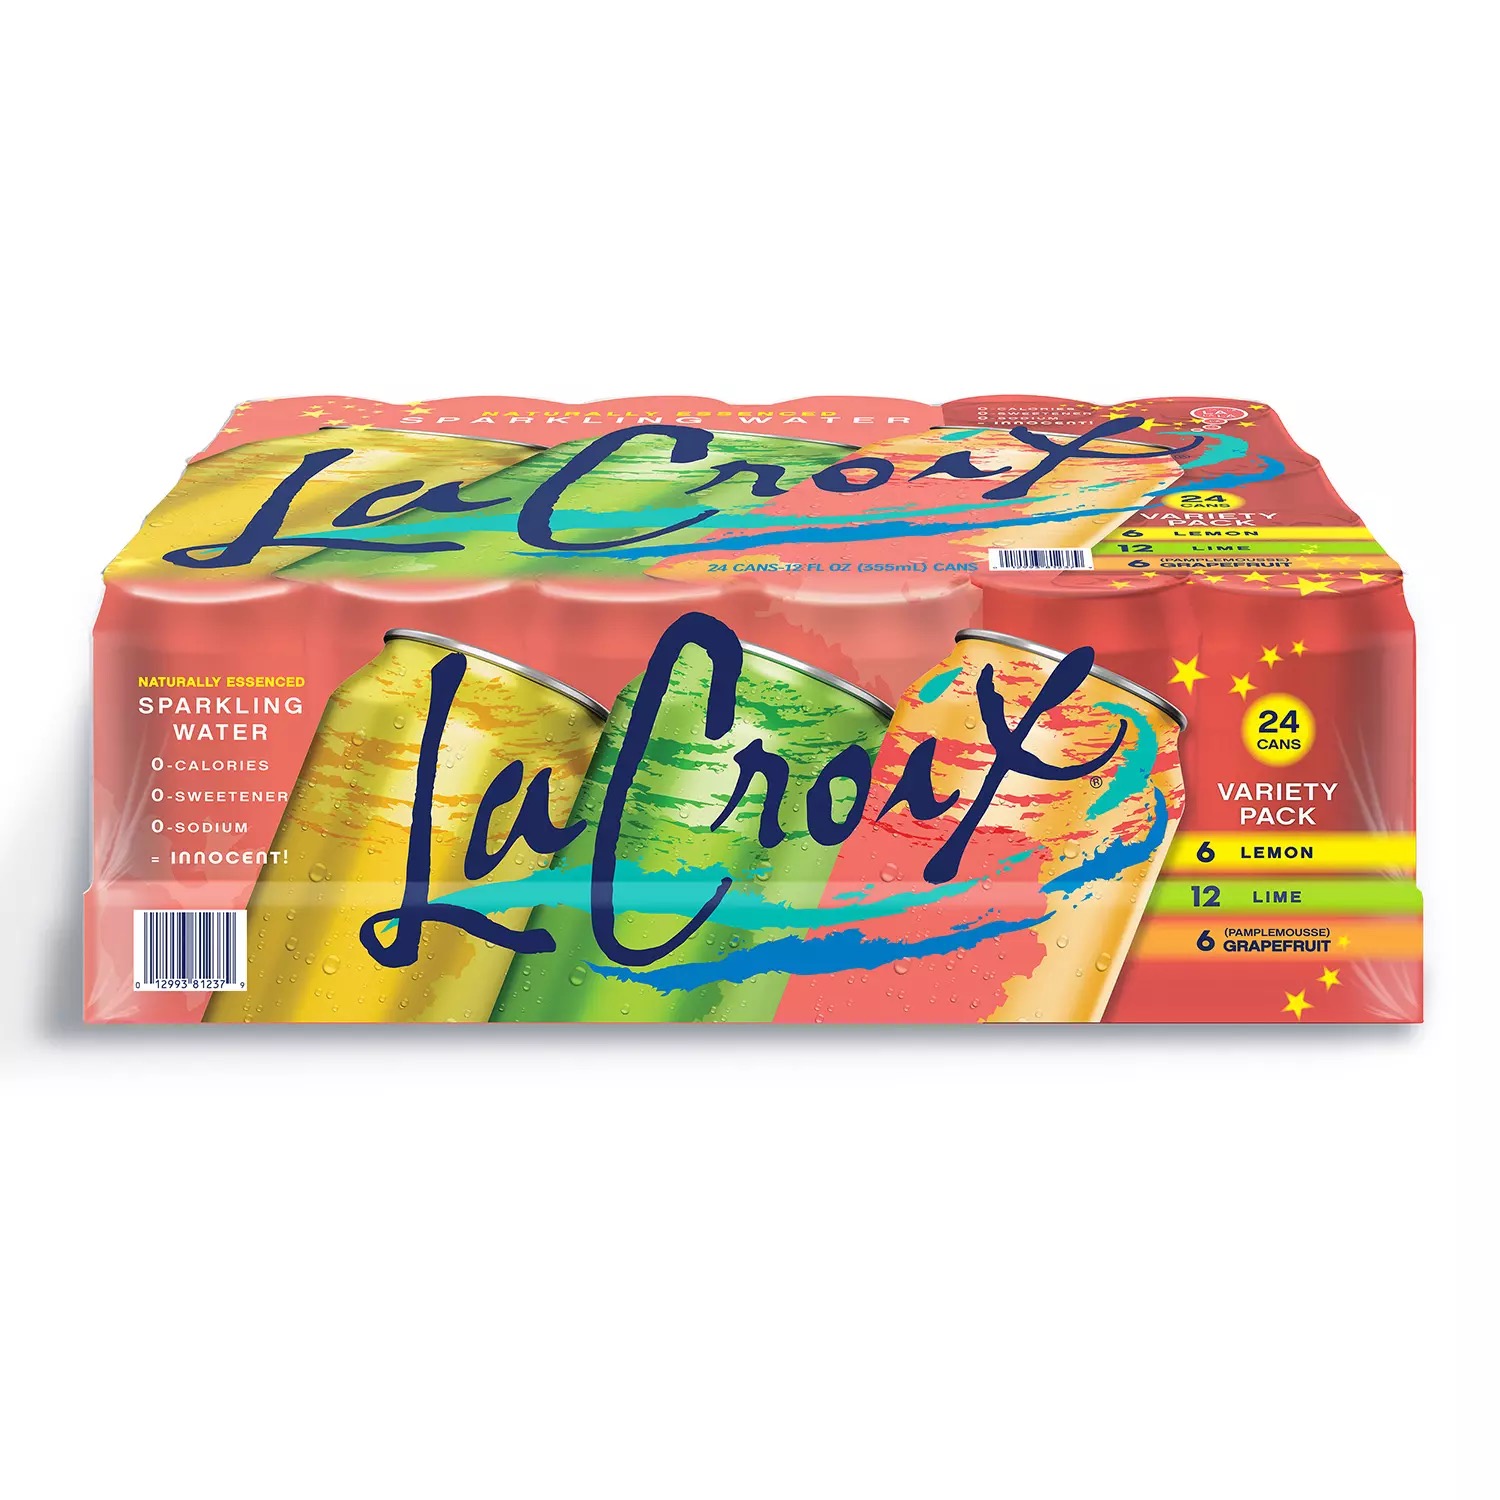 La Croix Sparkling Water Variety Pack (12 oz., 24 pk.) @ Sam's Club - $6.08